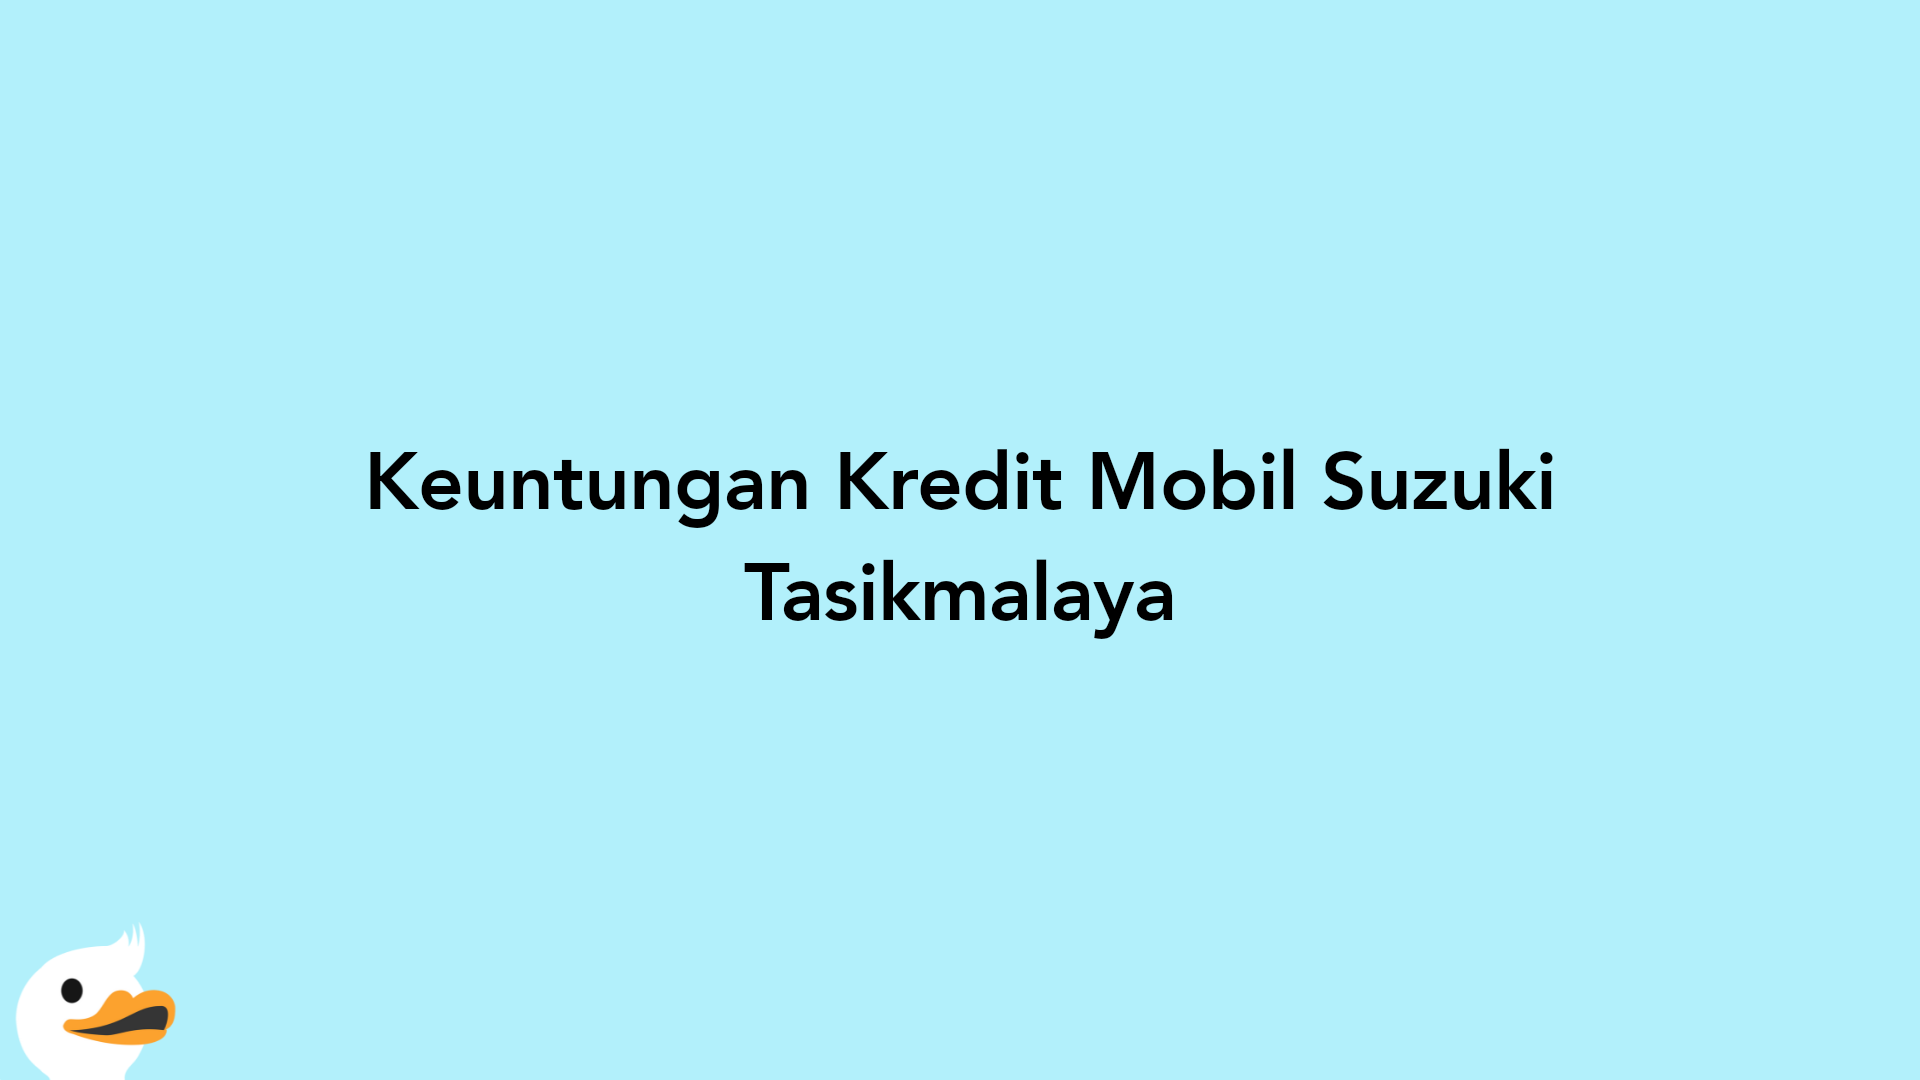 Keuntungan Kredit Mobil Suzuki Tasikmalaya